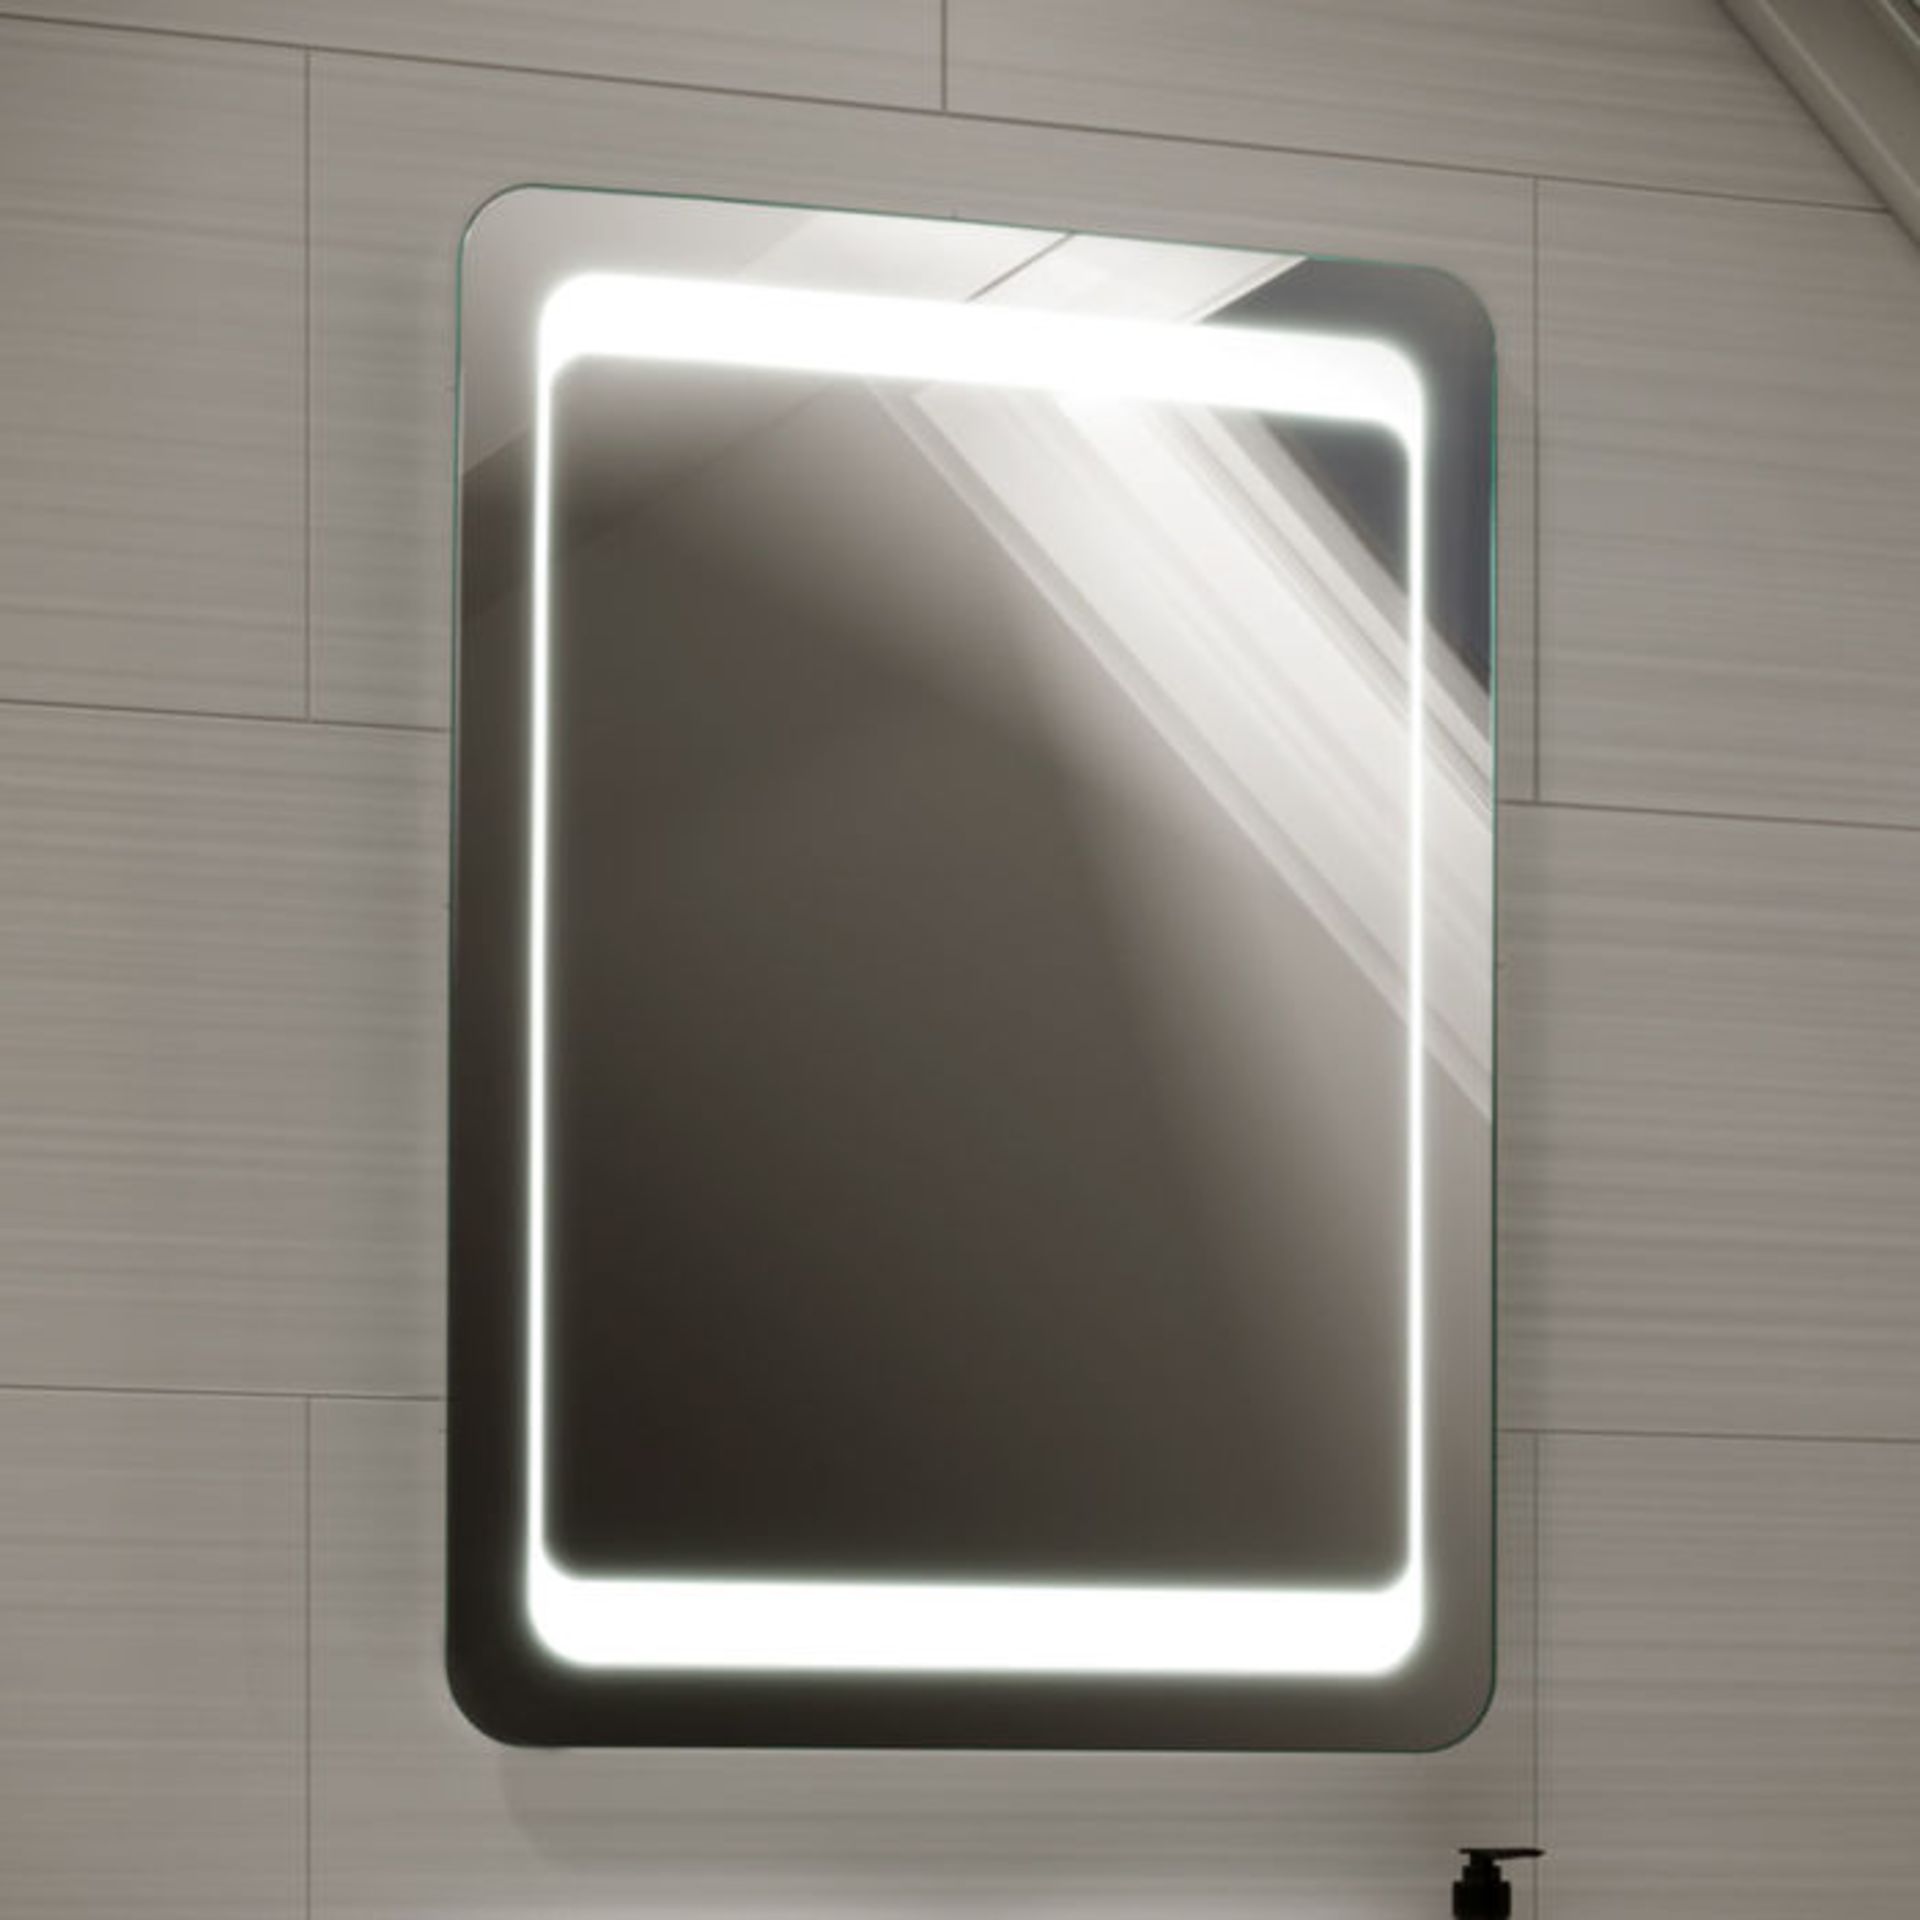 (HS120) 700x500mm Quasar Illuminated LED Mirror. Energy efficient LED lighting with IP44 rating - Image 2 of 4